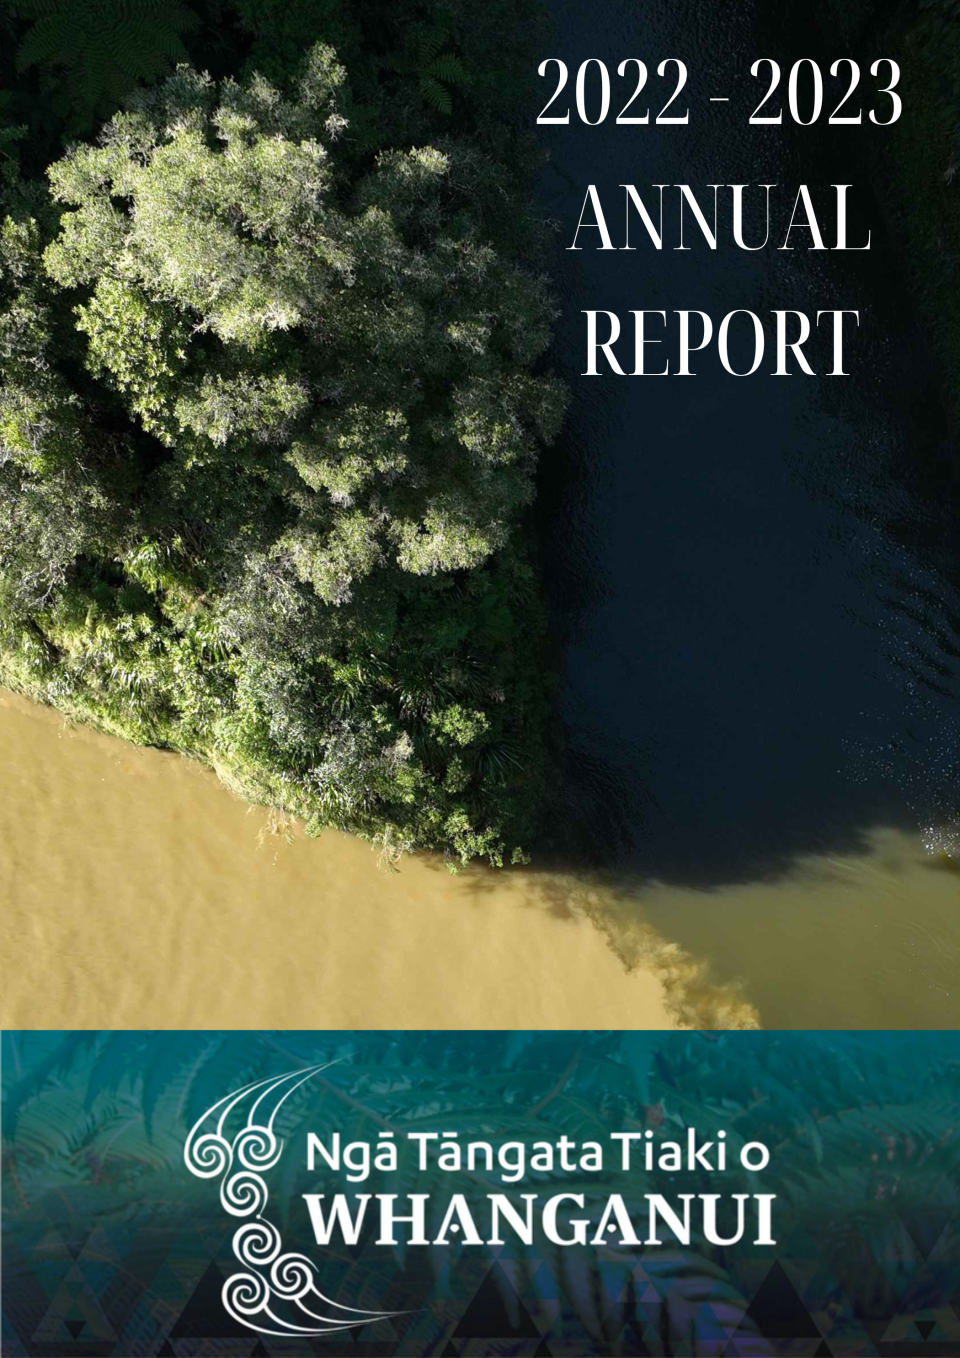 2023 Annual report cover